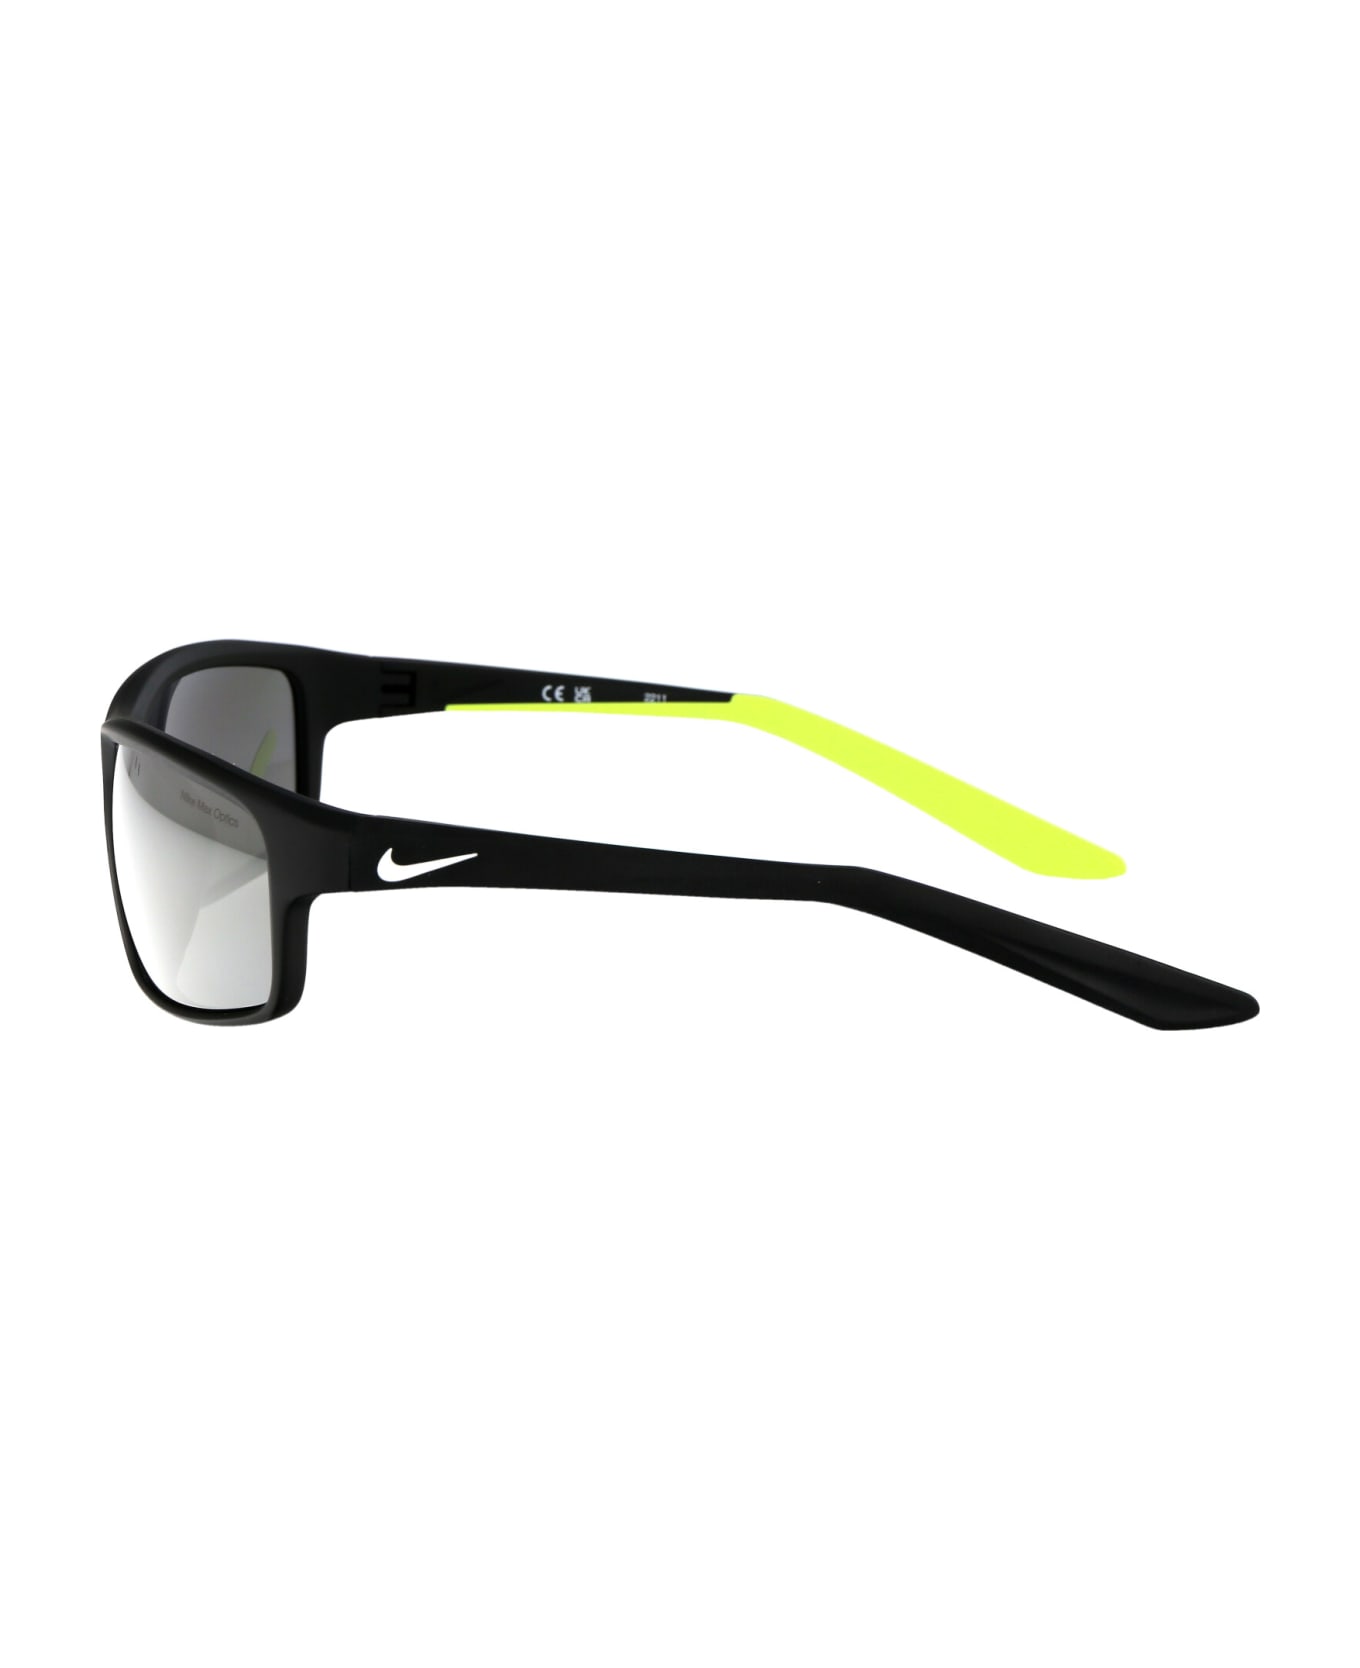 Nike Rabid 22 Sunglasses - 011 BLACK/ WHITE NOIR/BLANC サングラス